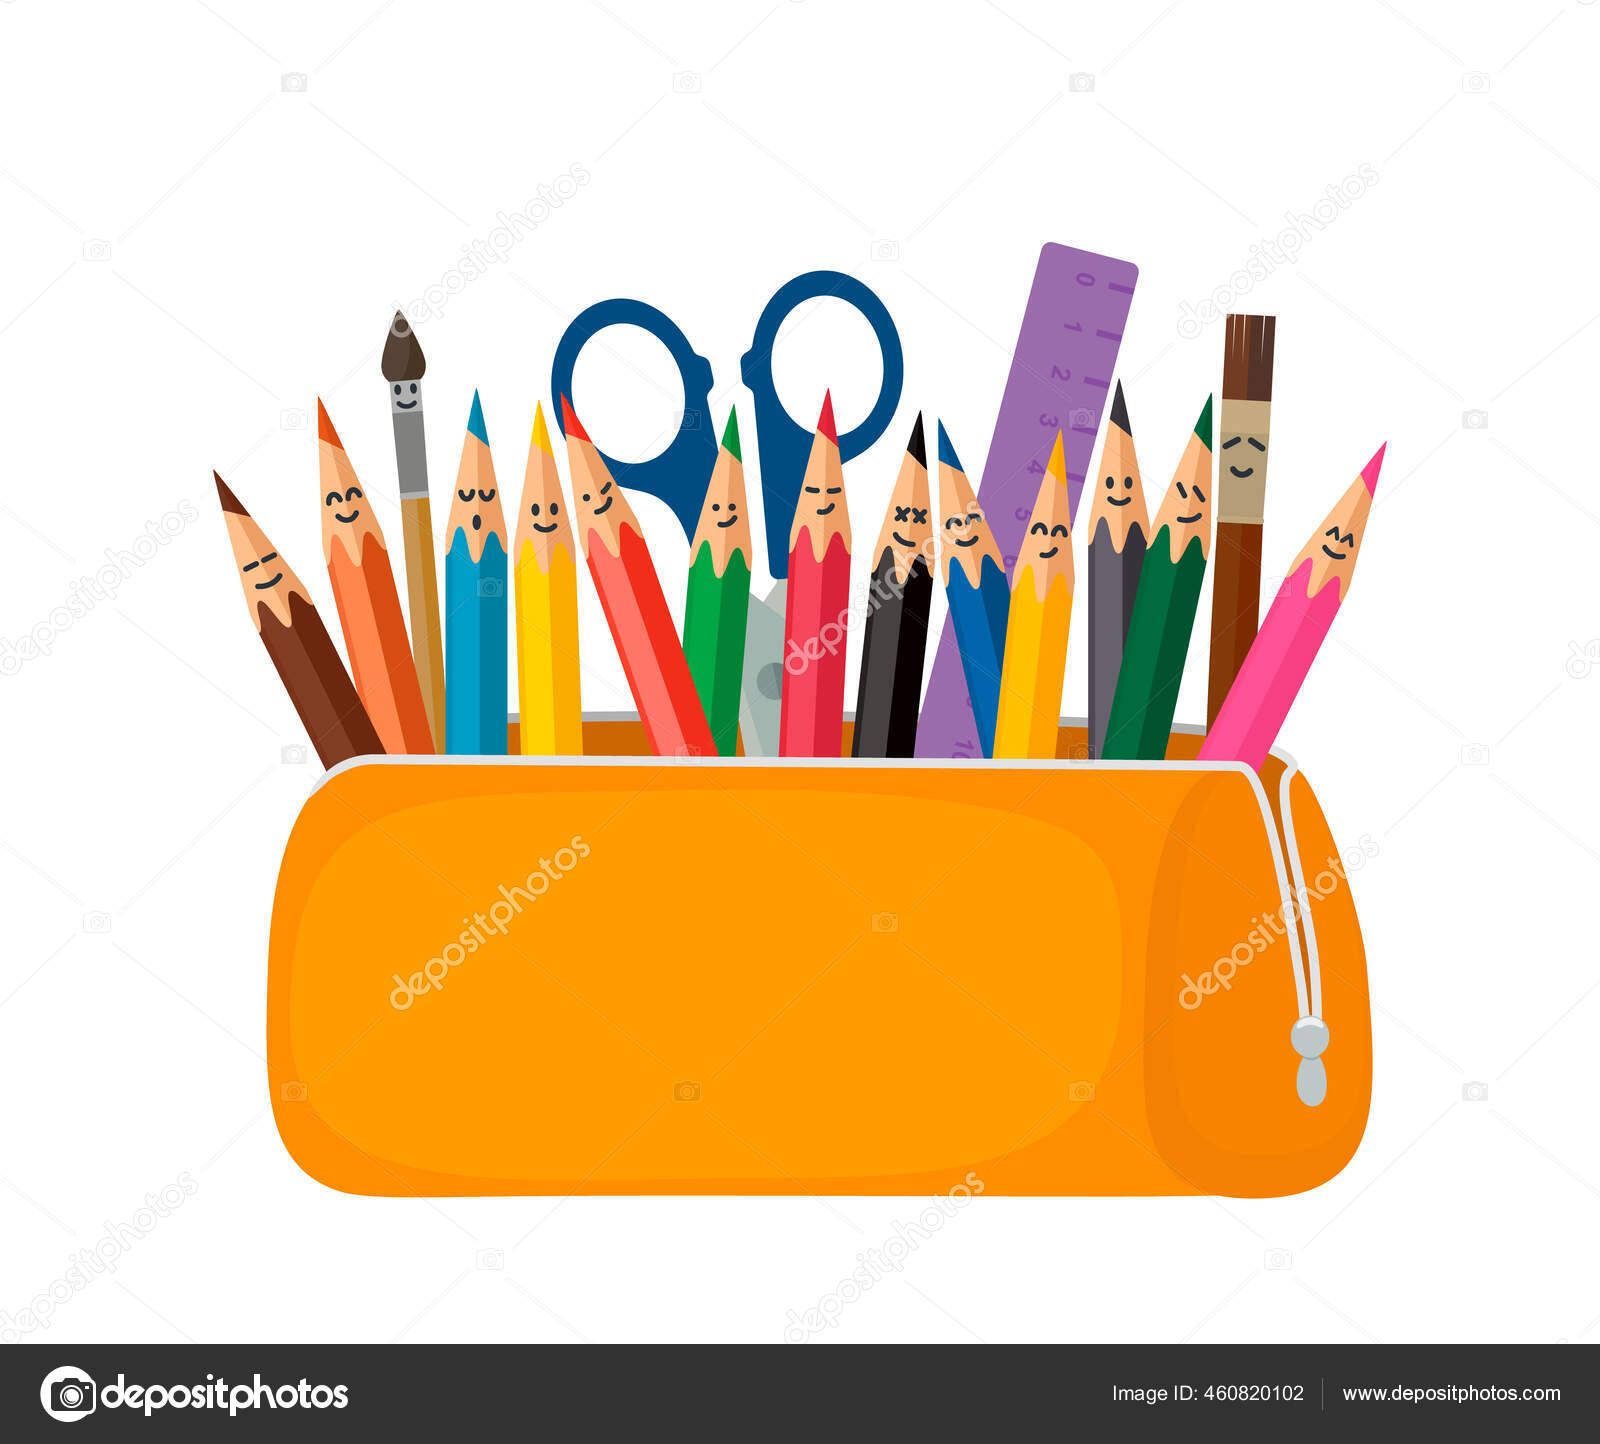 School Stationary, Pencil Case, Pens, Crayons